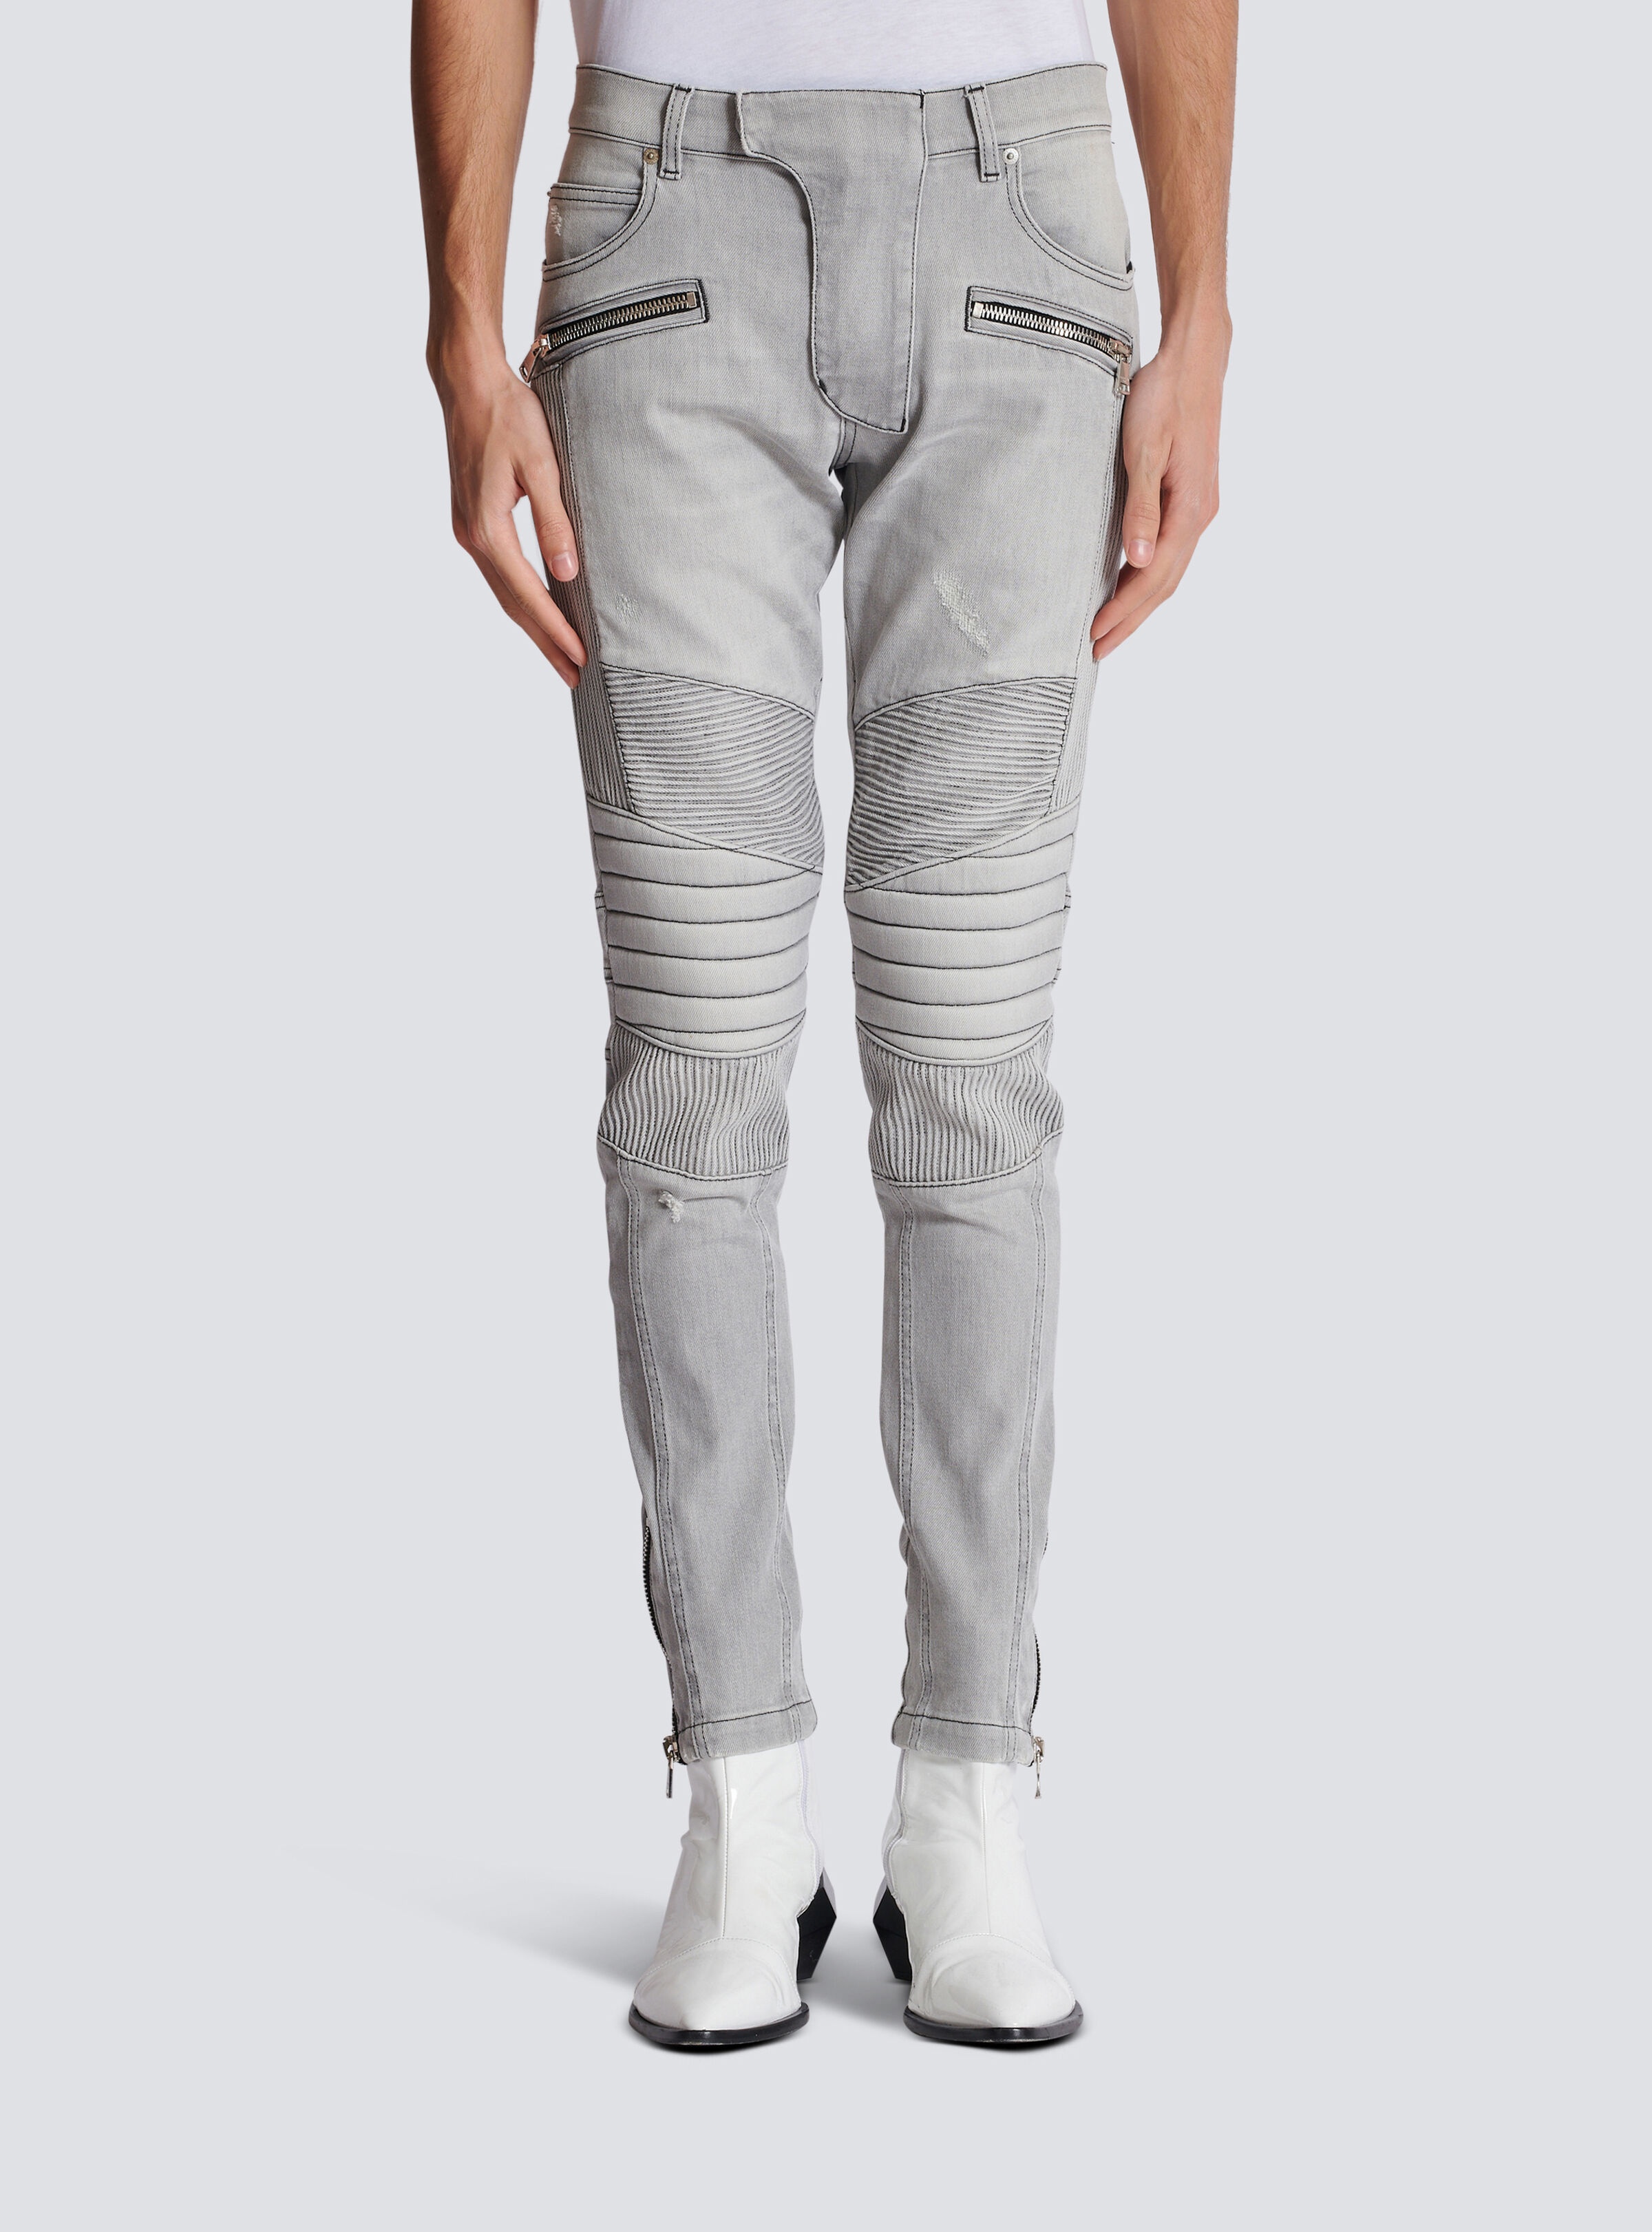 Biker jeans in Grey quilted denim - 5